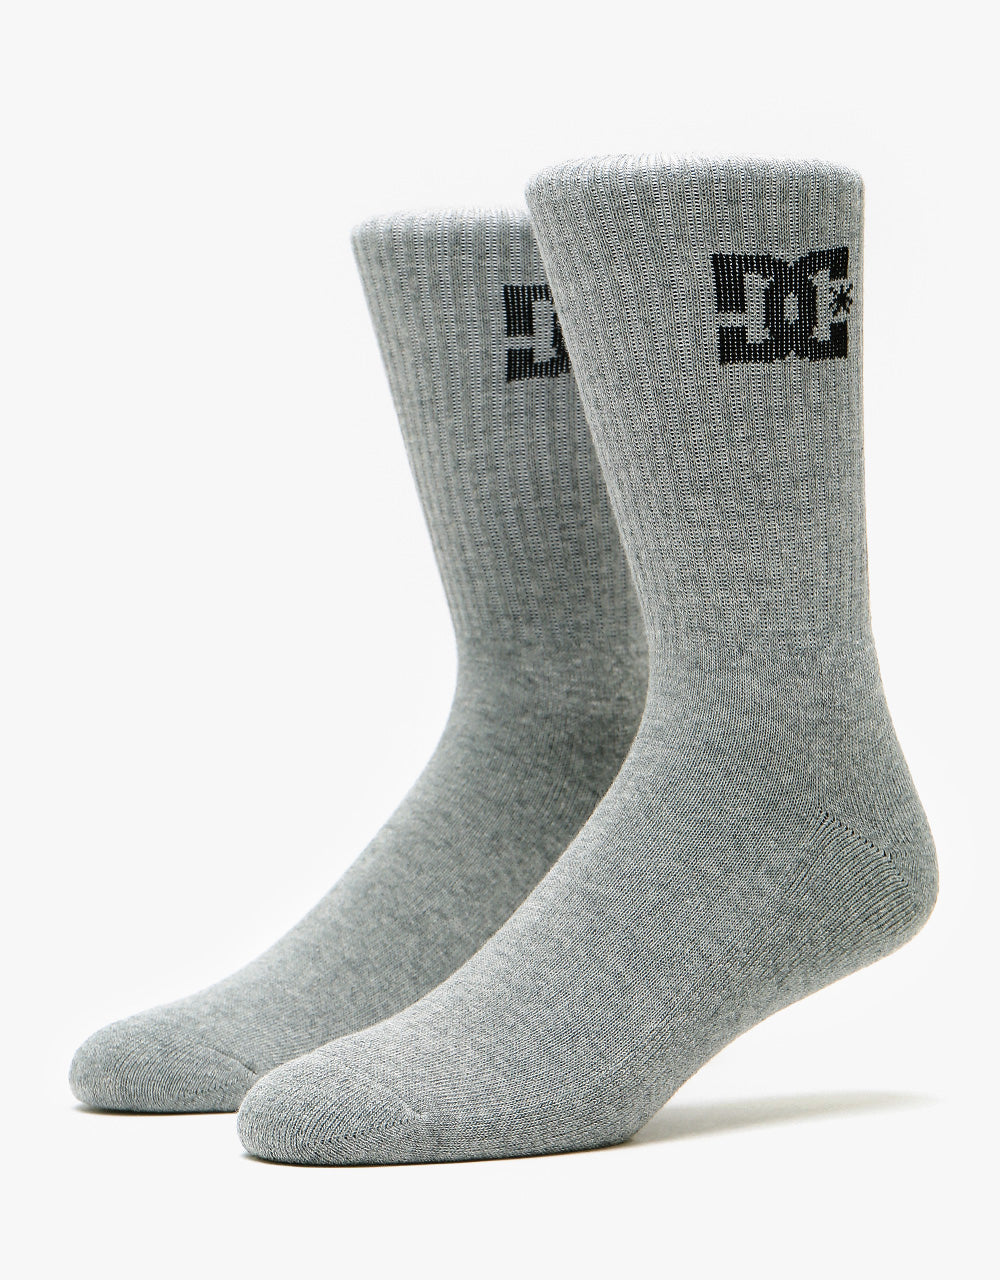 DC Crew 3 Pack Socks - Assorted